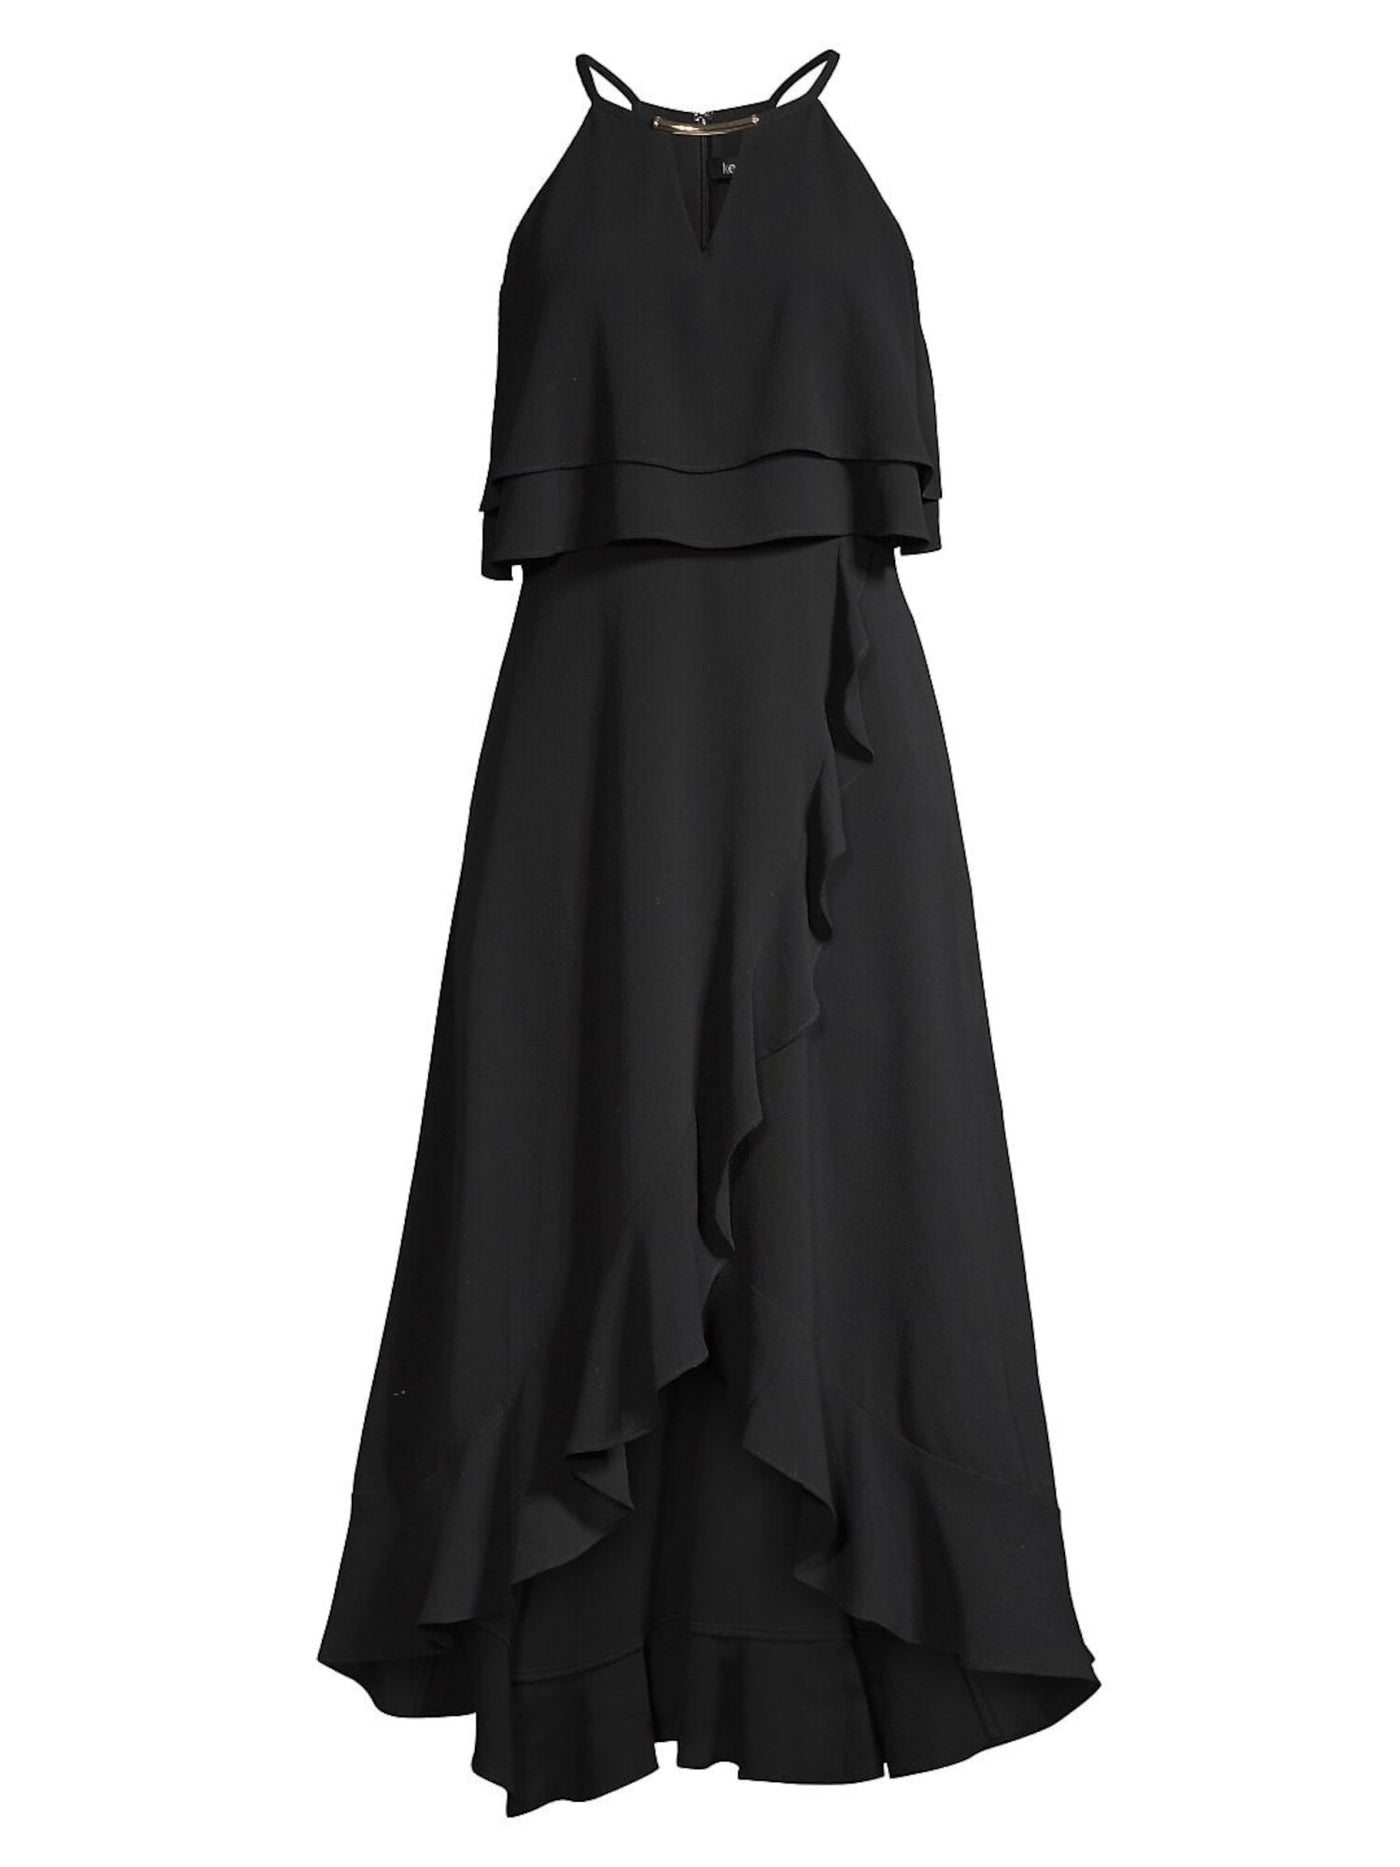 KENSIE DRESSES Womens Black Stretch Zippered Textured Embellished Ruffled Keyhole Sleeveless Halter Midi Cocktail Hi-Lo Dress 0